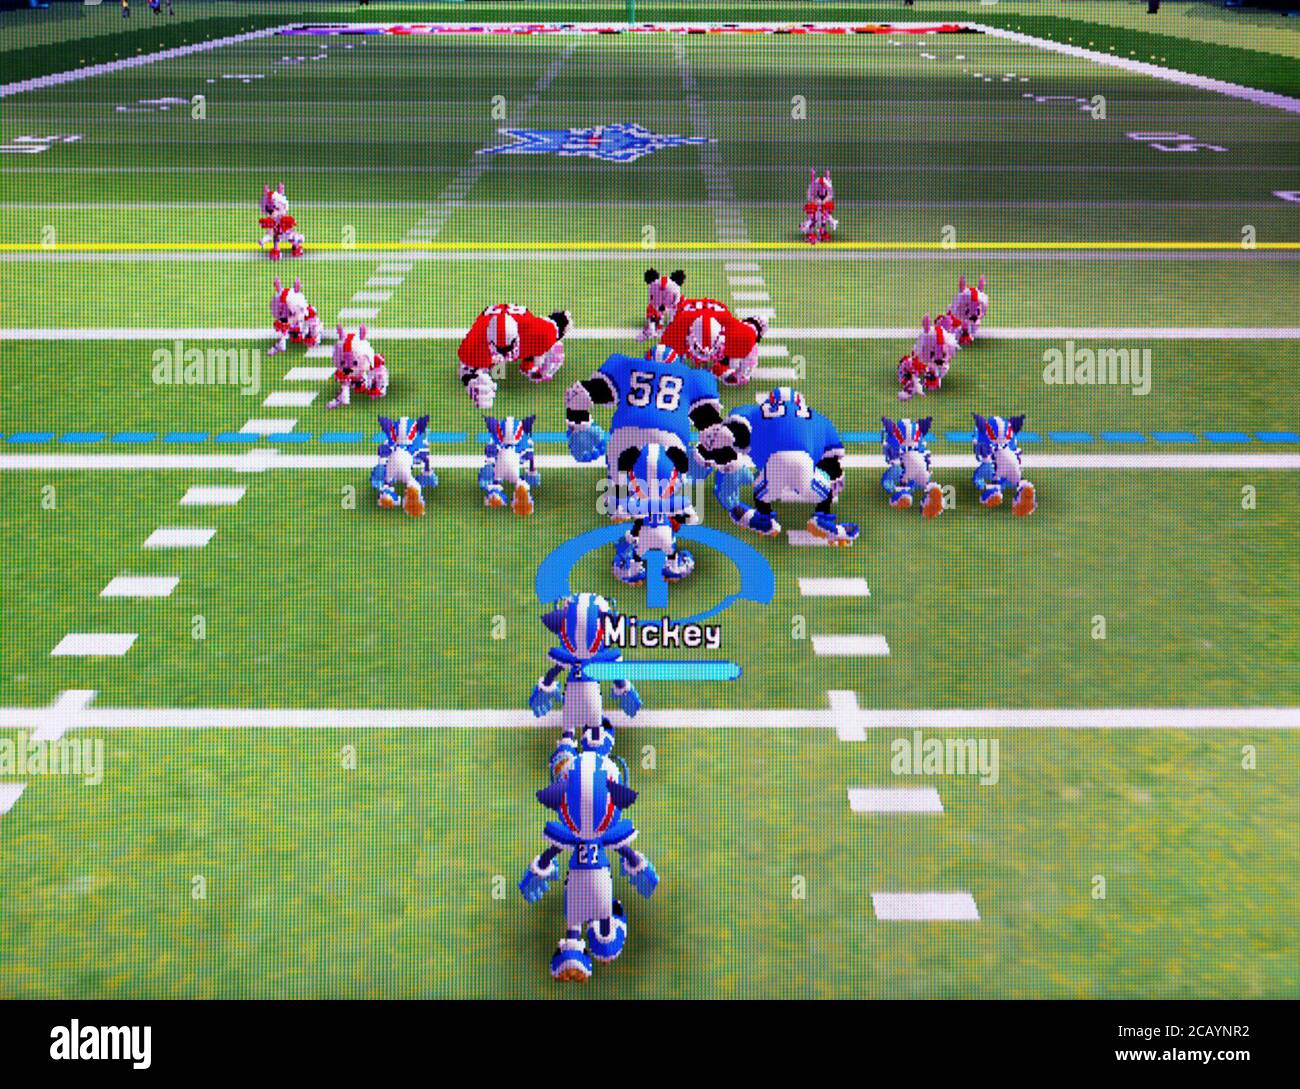 Disney Sports Football - Nintendo Gamecube Videogame - Editorial use only Stock Photo